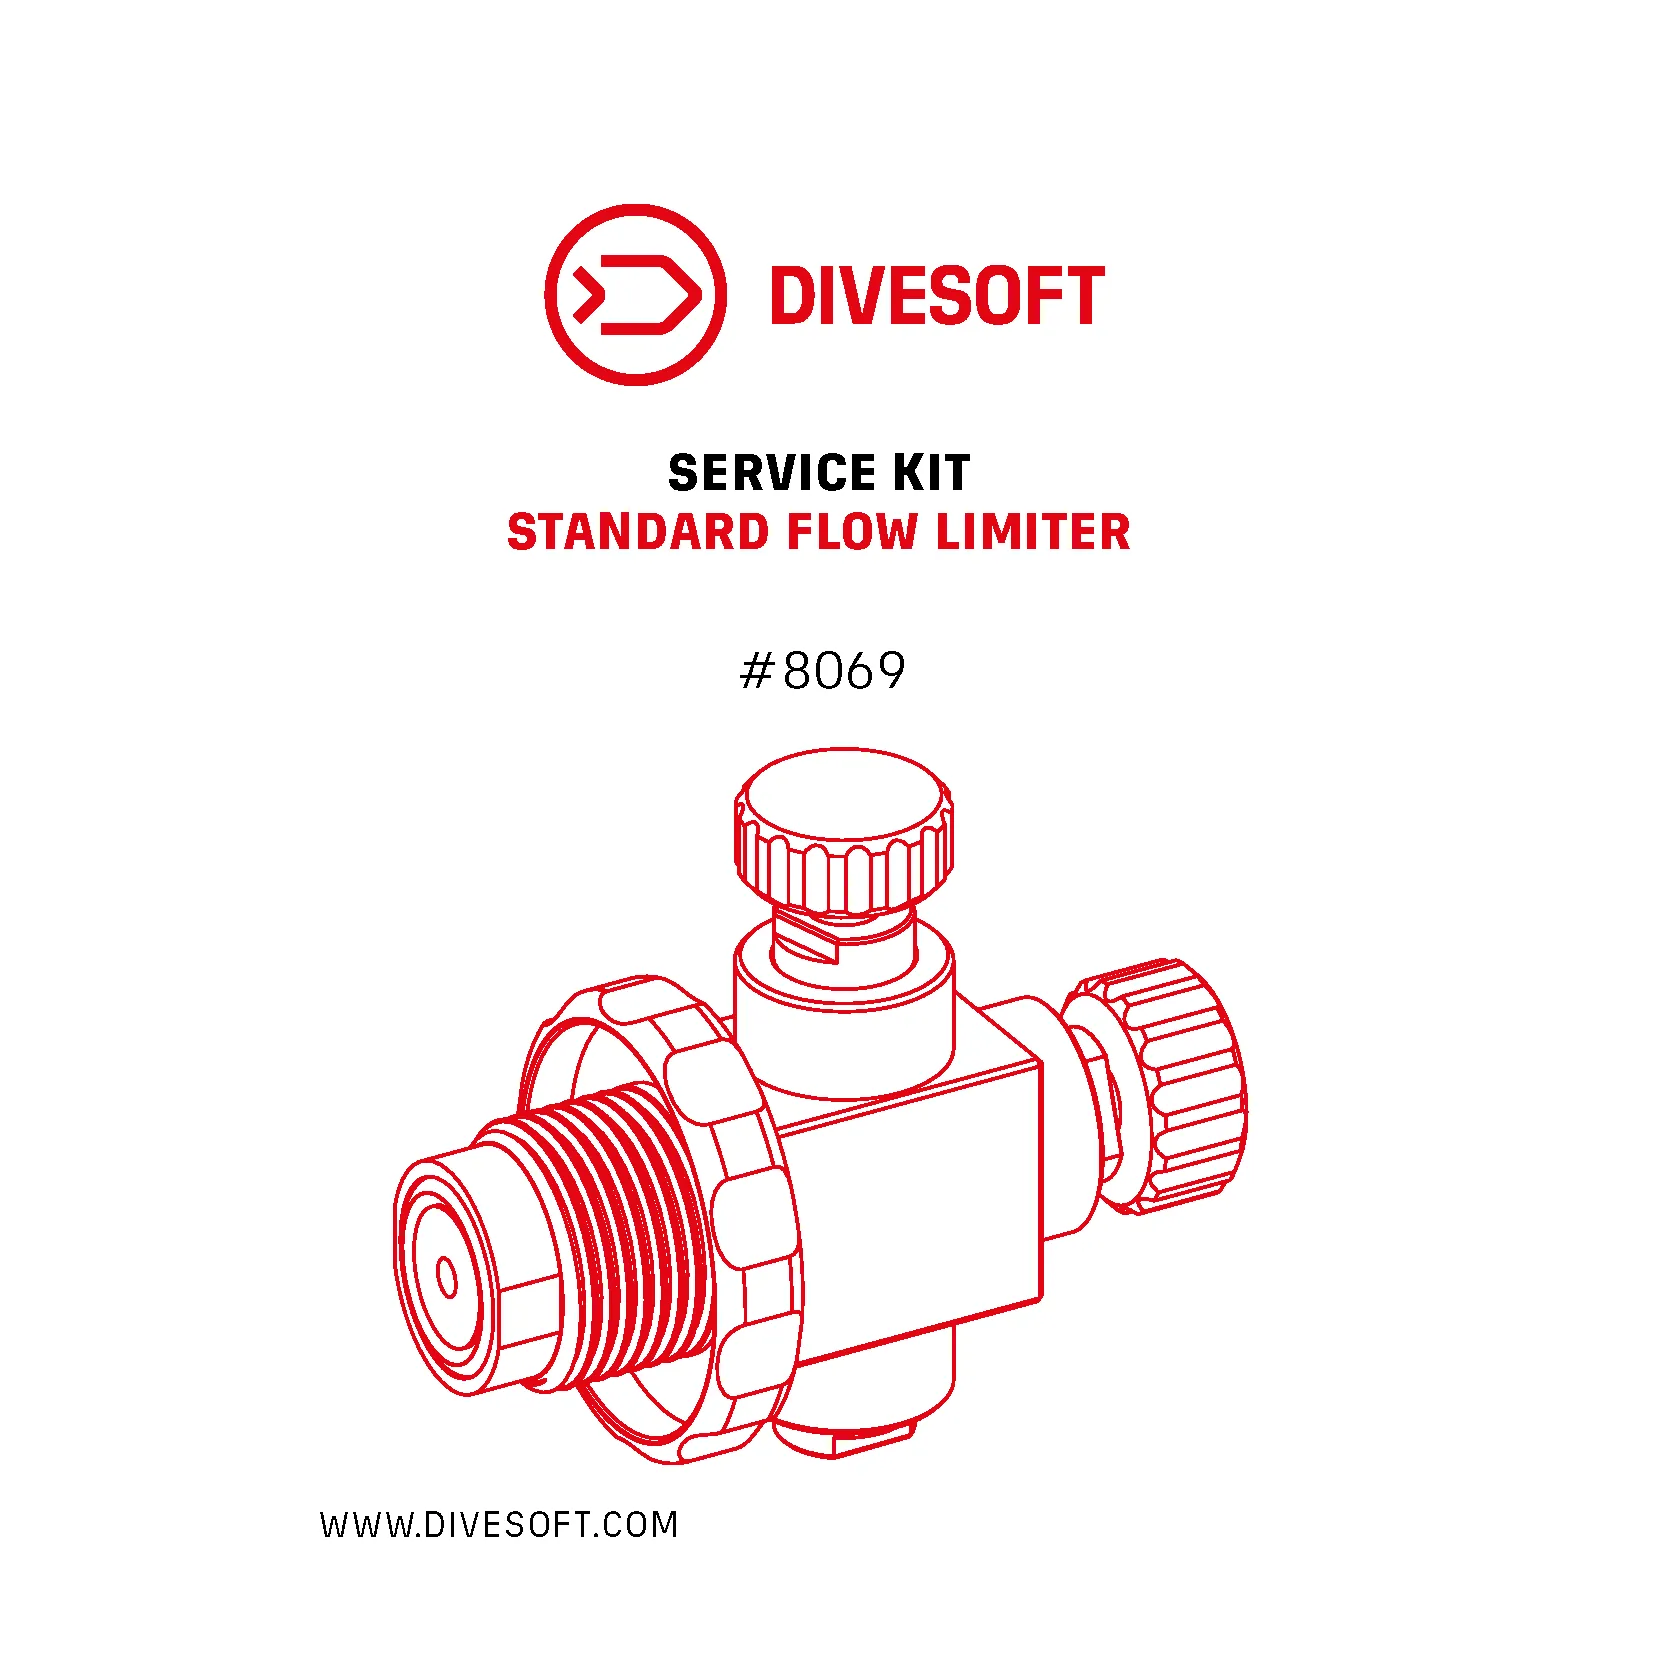 Service kit - Standard flow limiter